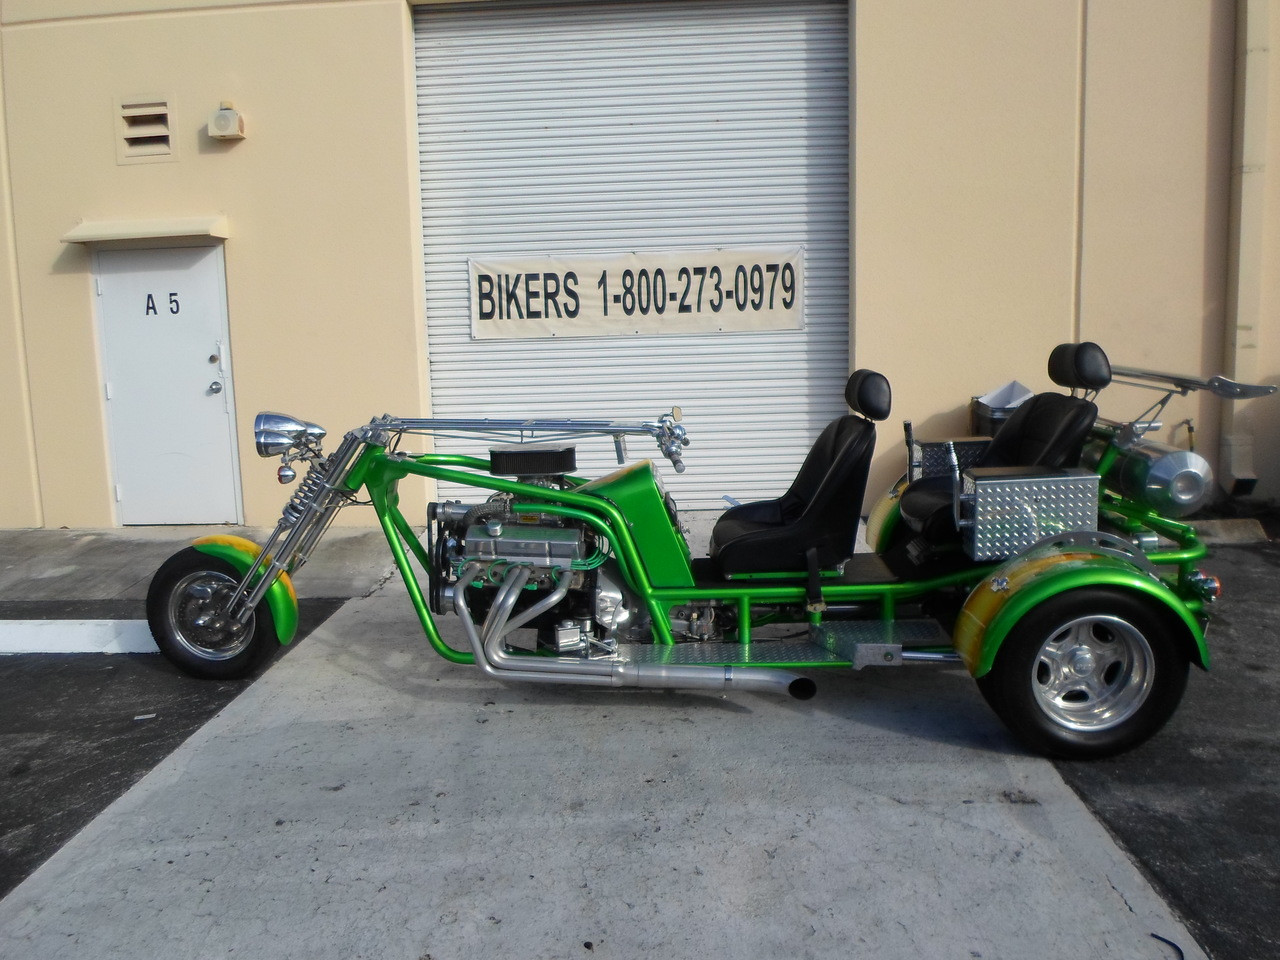 Custom Trikes and Motorcycle's Built to Order - Bikers, Inc.